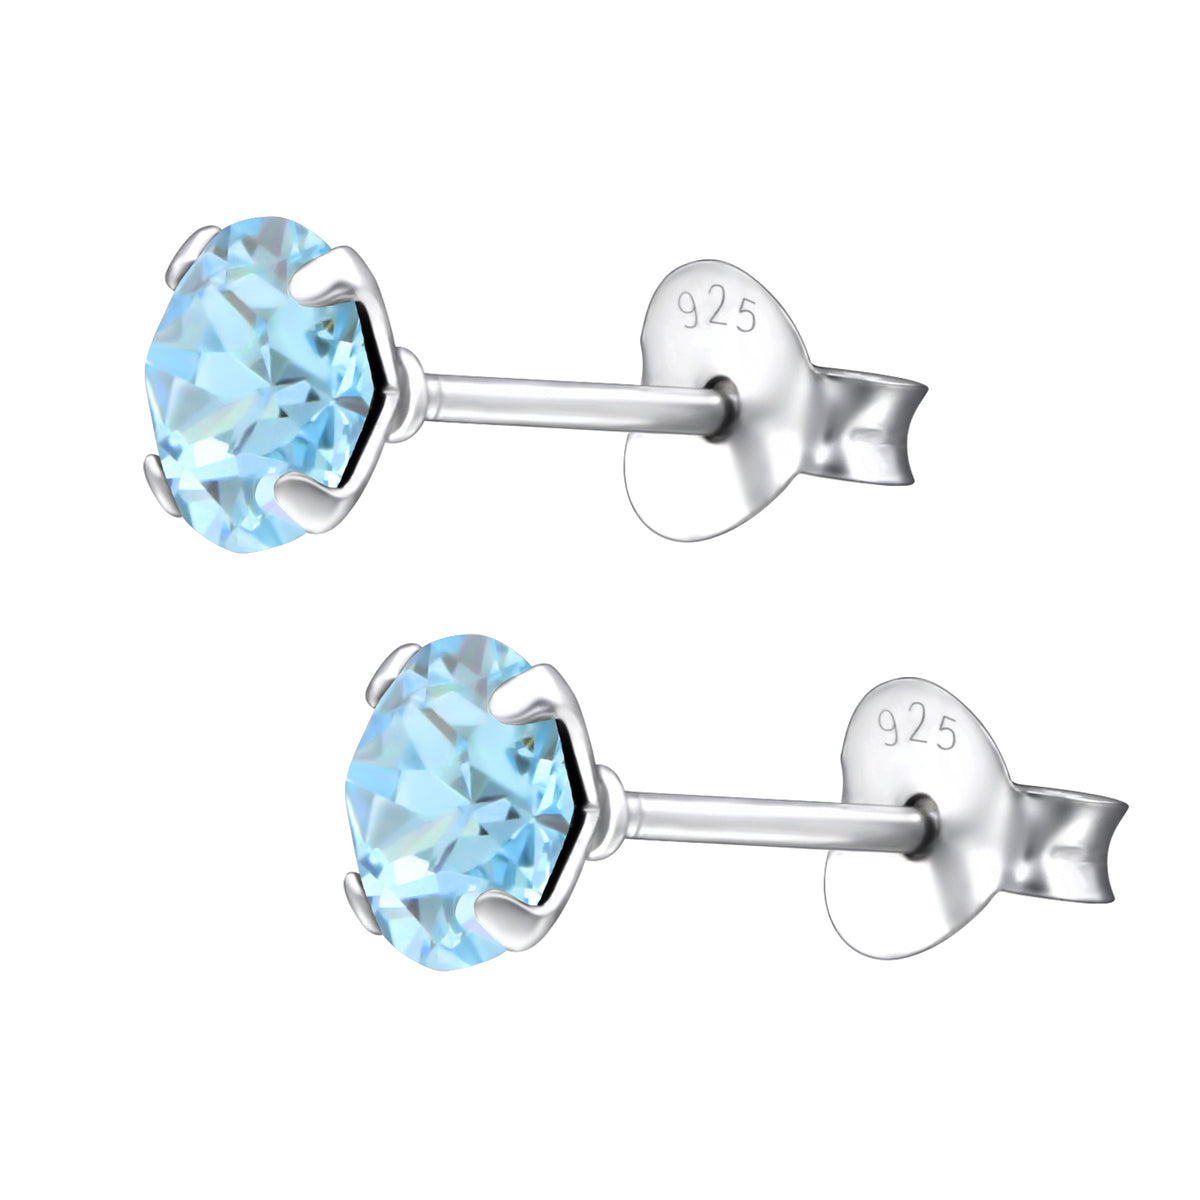 Blue crystal silver earrings